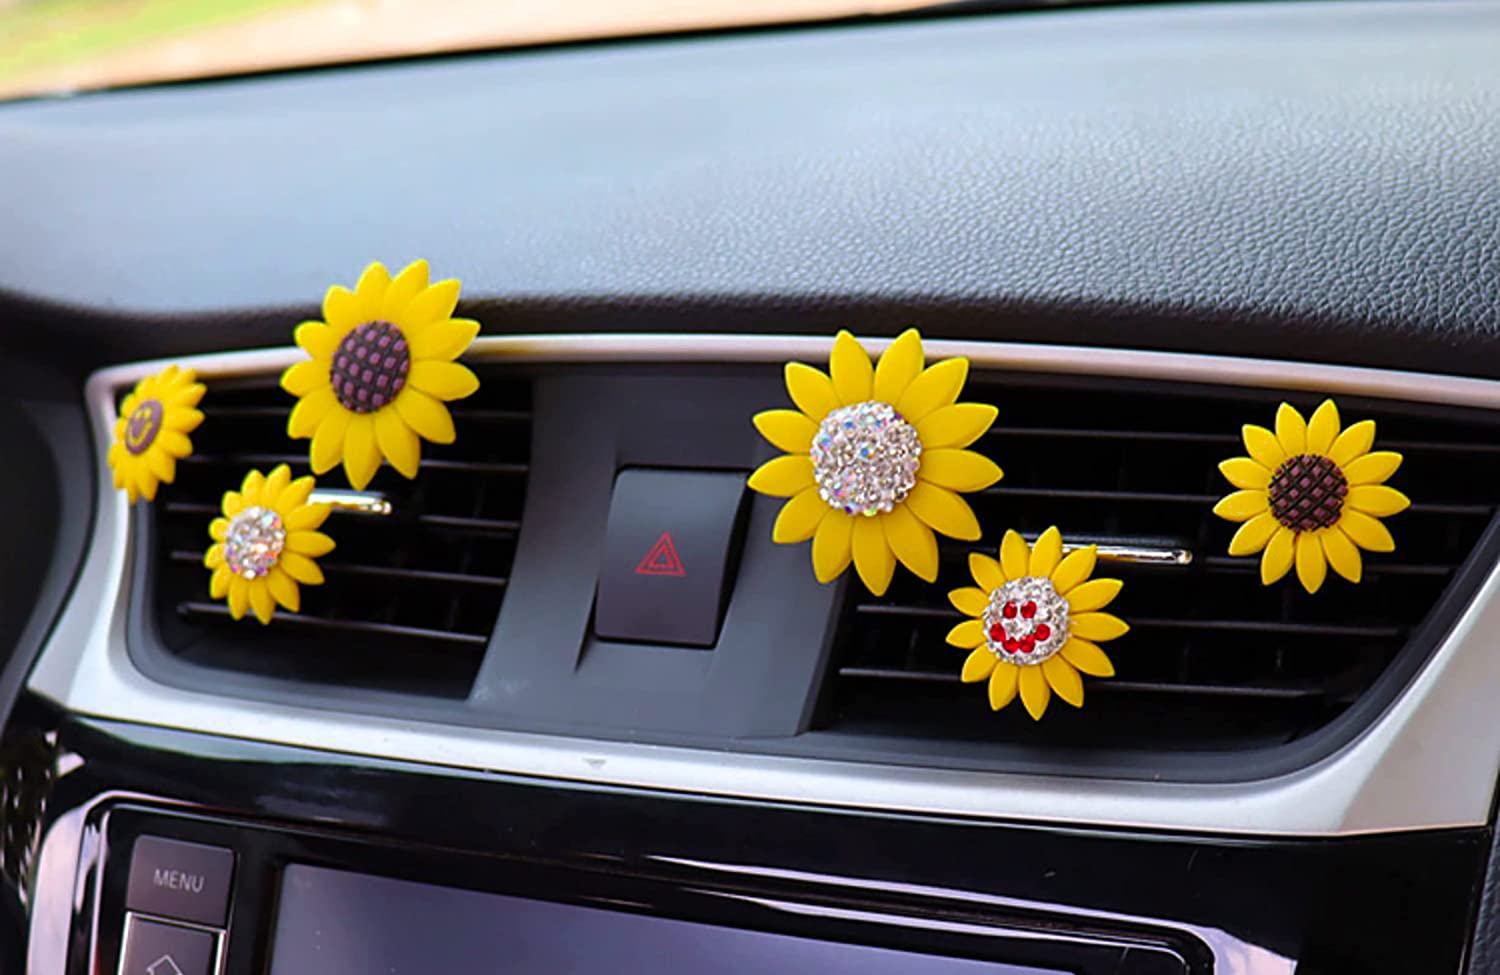 2 Pieces Sunflower Air Vent Clips Sunflower Car Accessories Cute Car Air  Freshener Sun flower Gift Decorations Charm Car Clip Interior Air Vent  Decor 